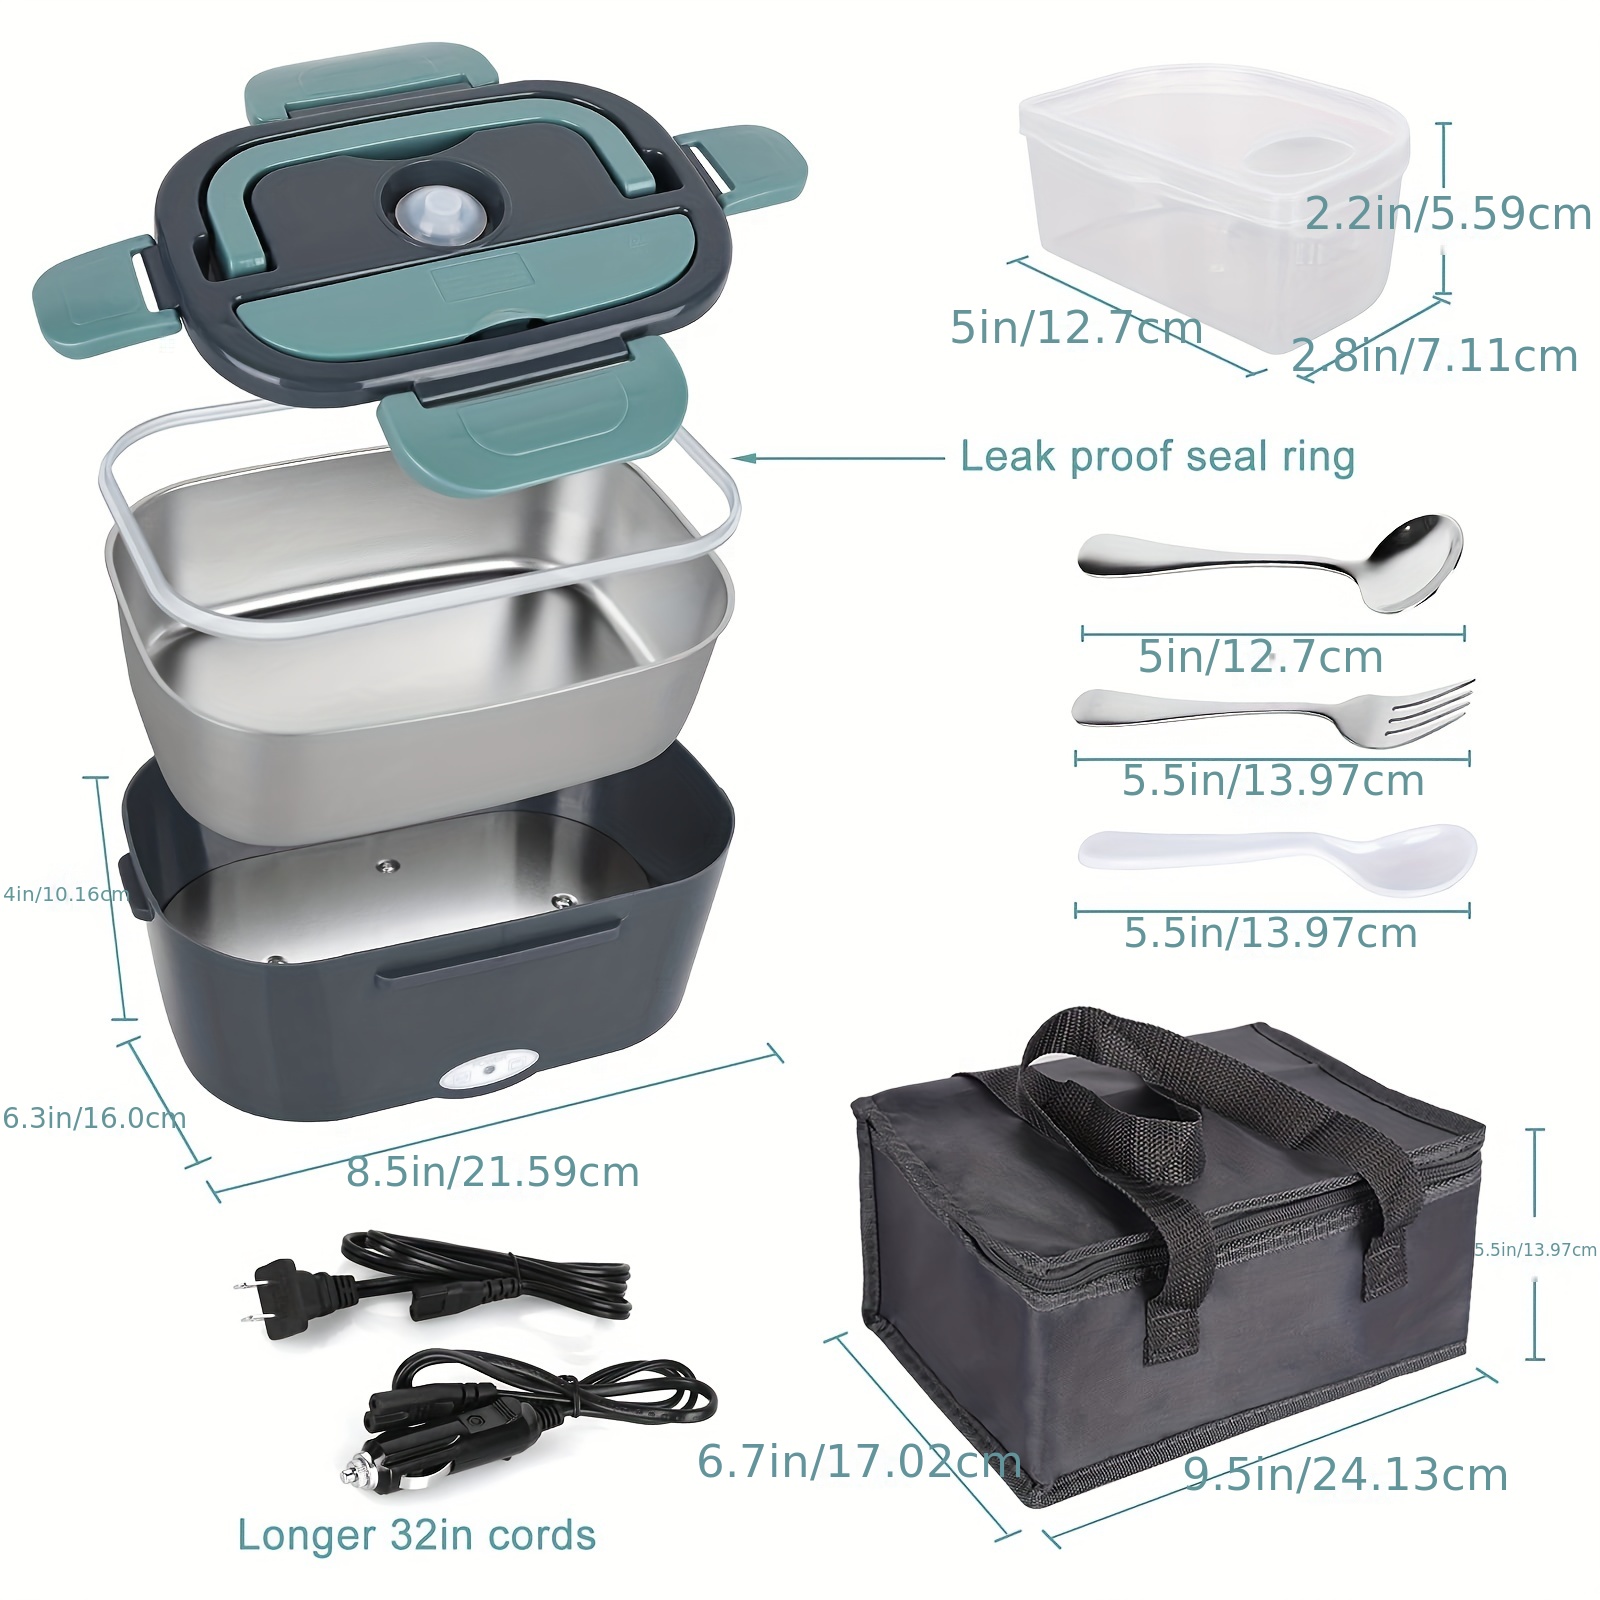 110v/12v portable electric lunchbox / keep